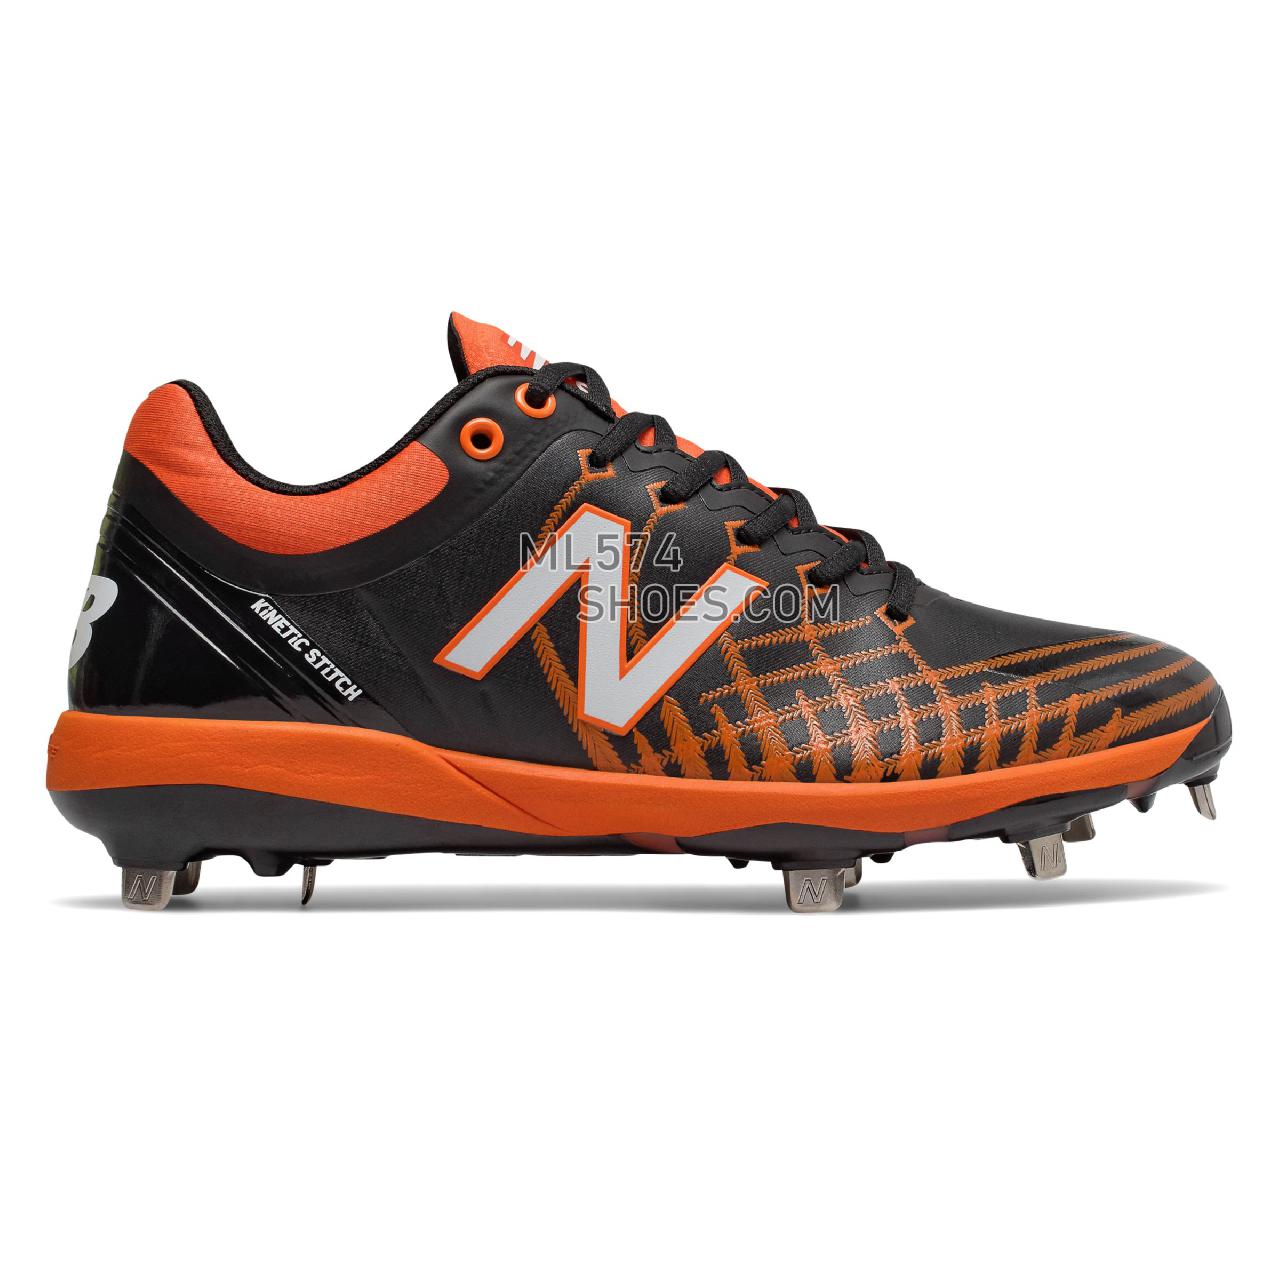 New Balance 4040v5 Metal - Men's Baseball Turf - Black with Orange - L4040BO5